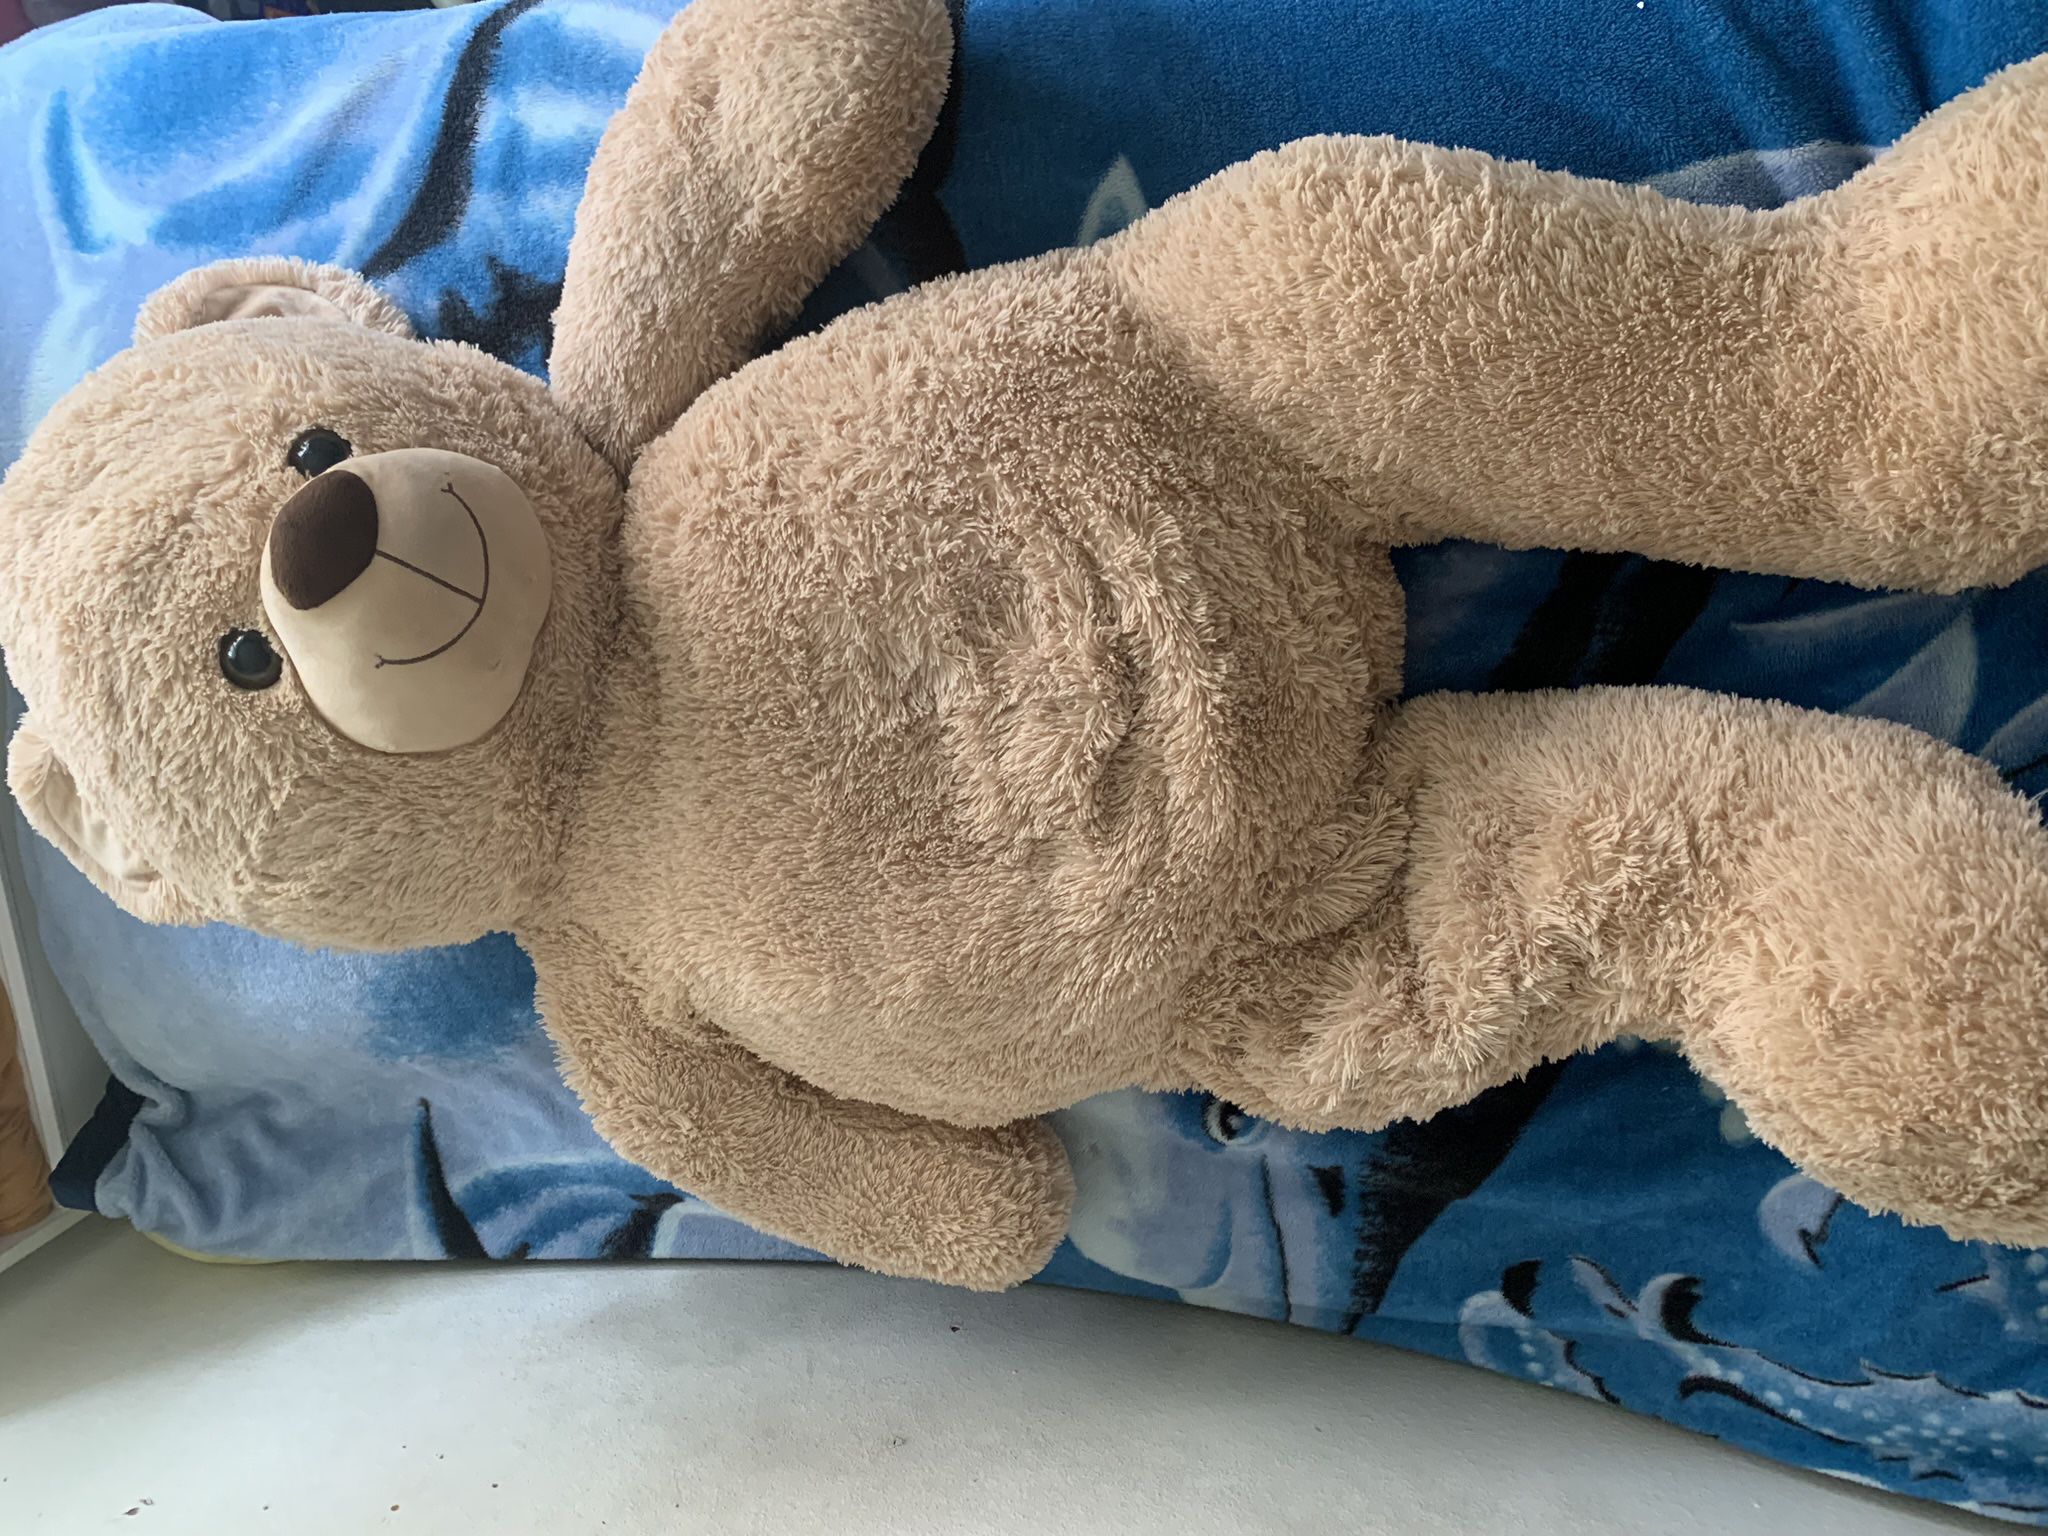 Stuffed Animal ( Teddy Bear)